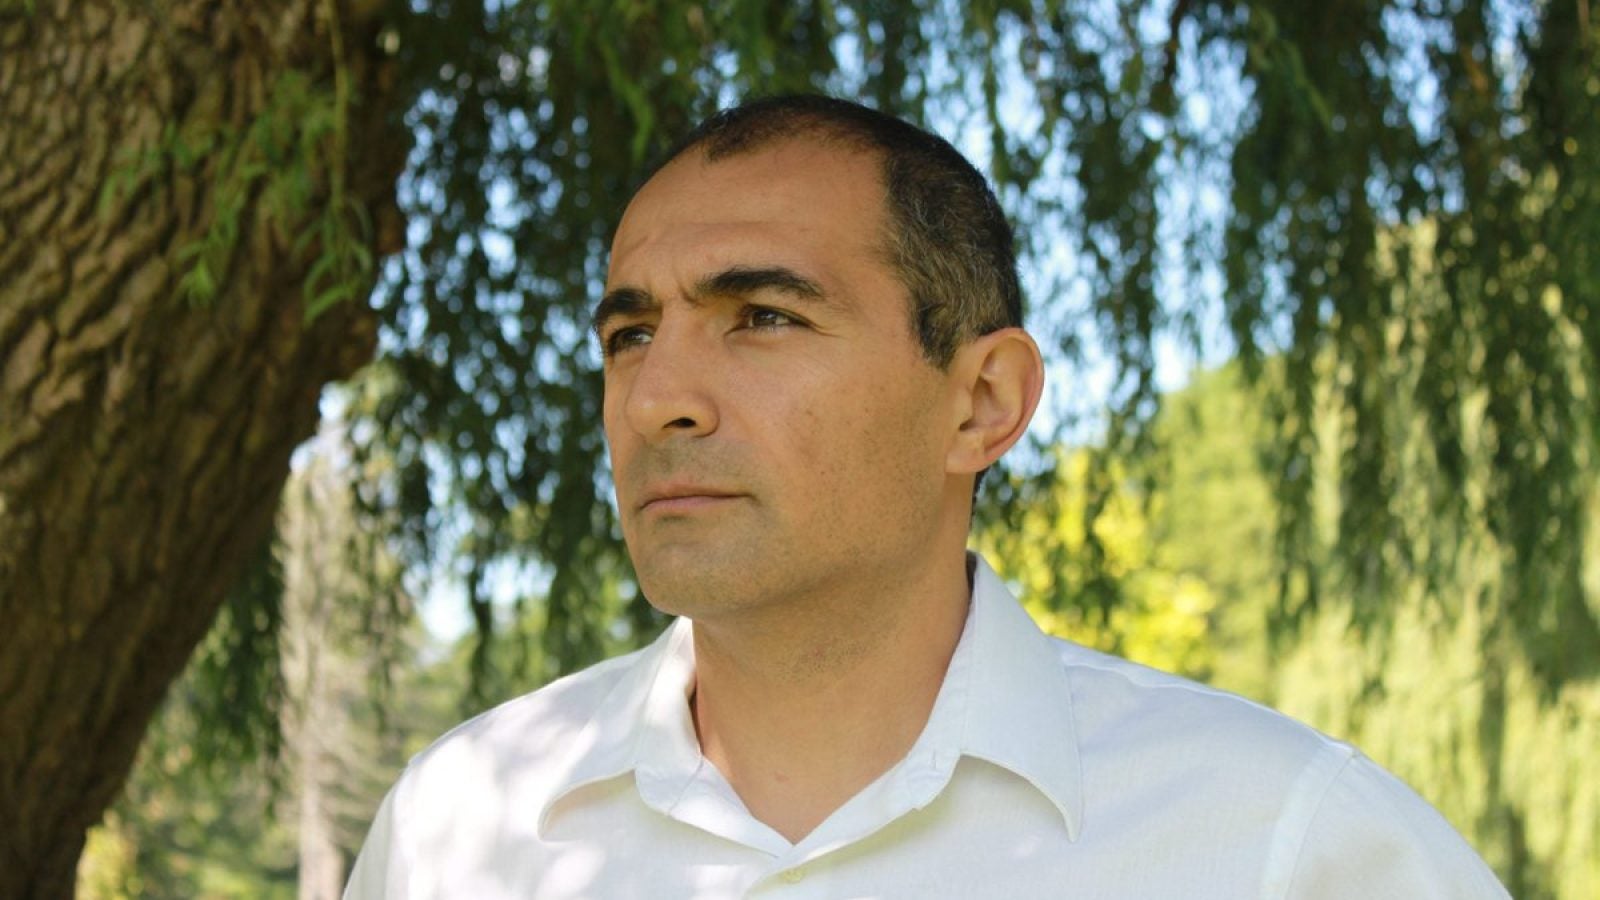 ACMCU Director Dr. Nader Hashemi